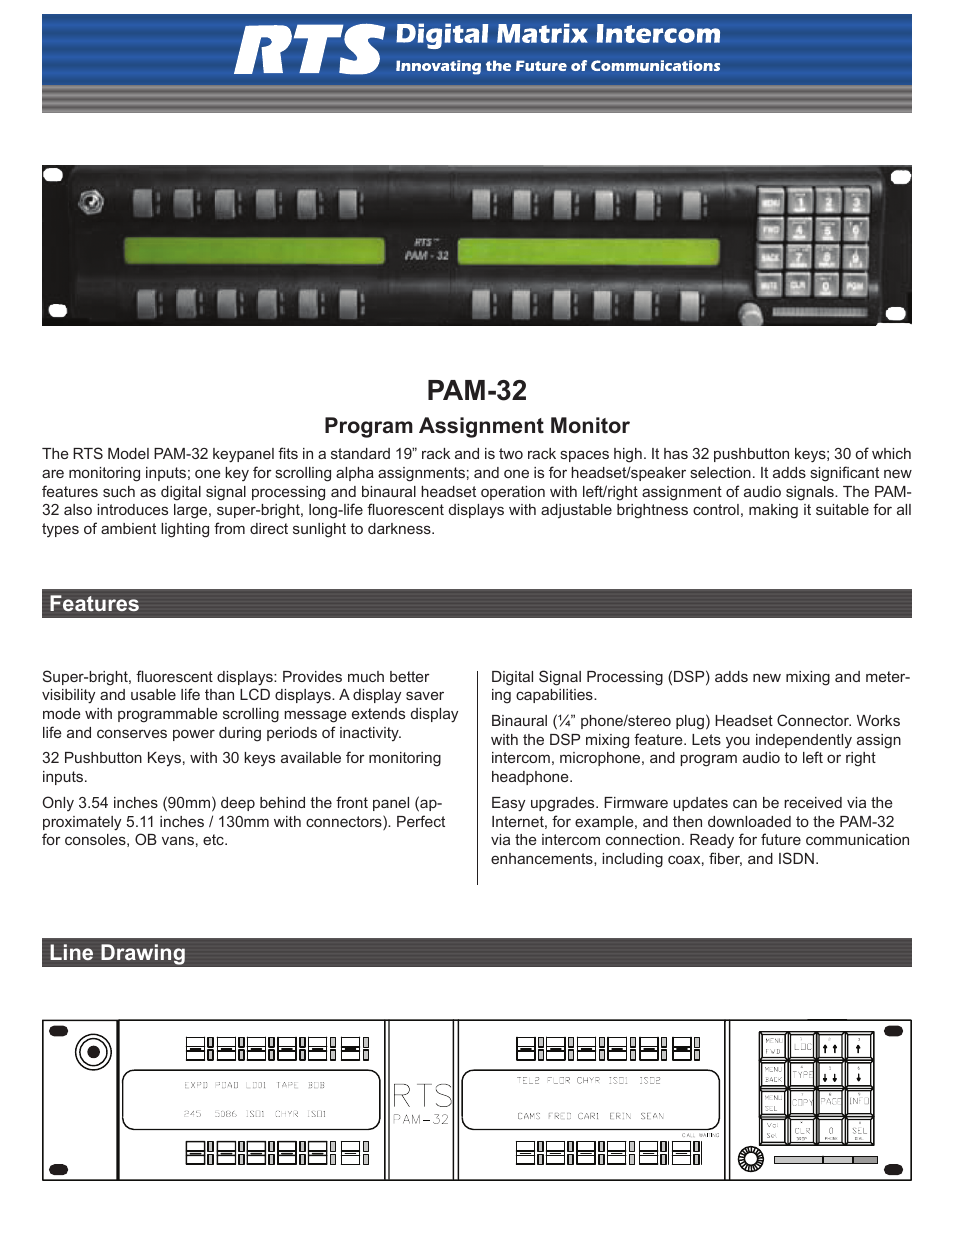 Digital Matrix Intercom PAM-32